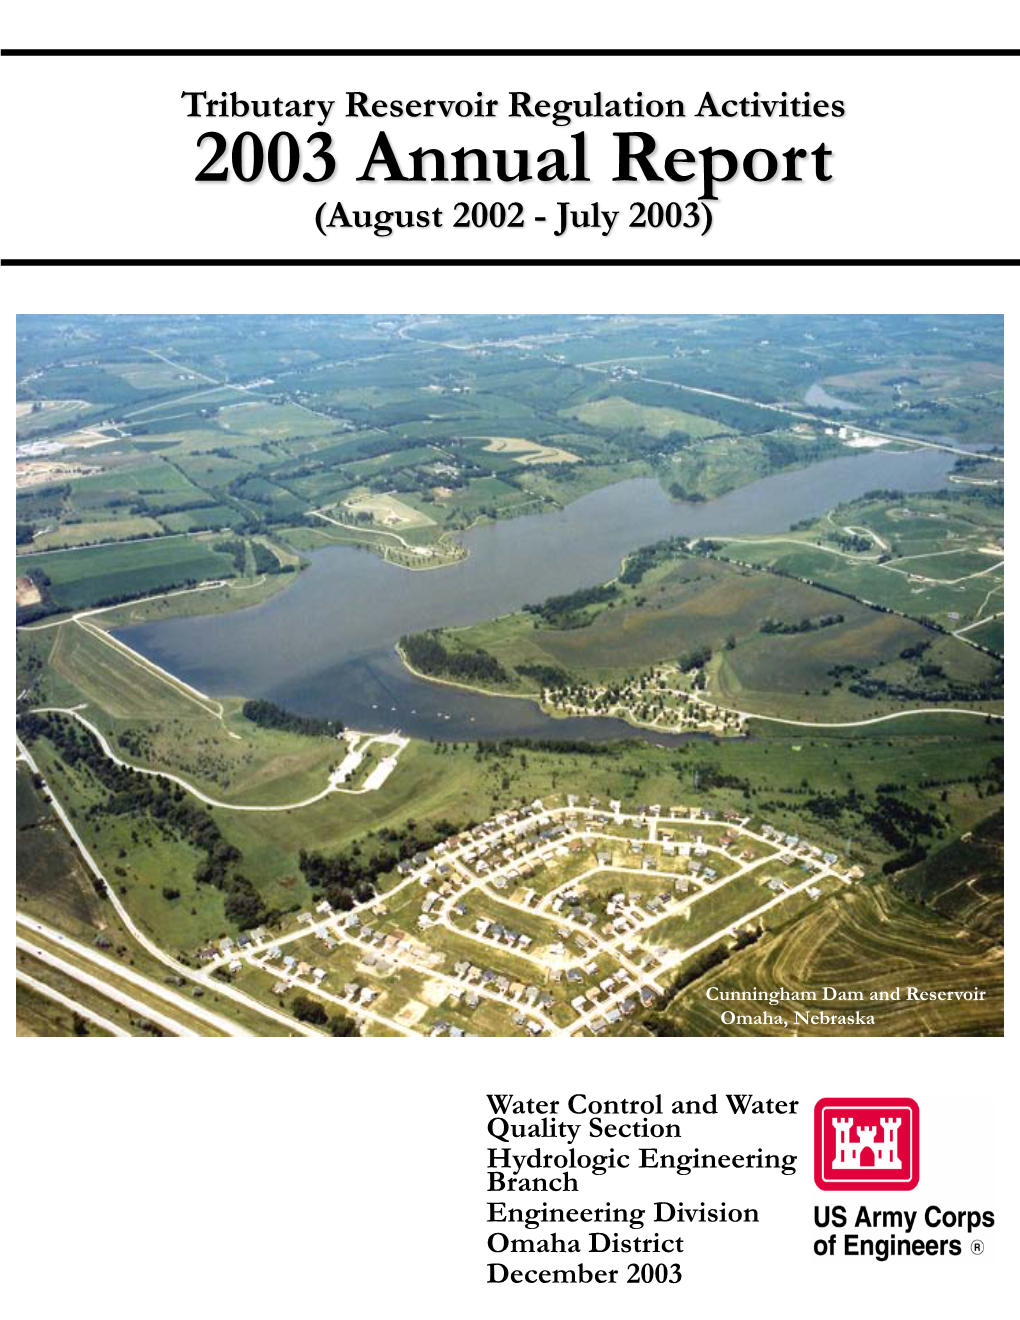 Annual Report – 1999